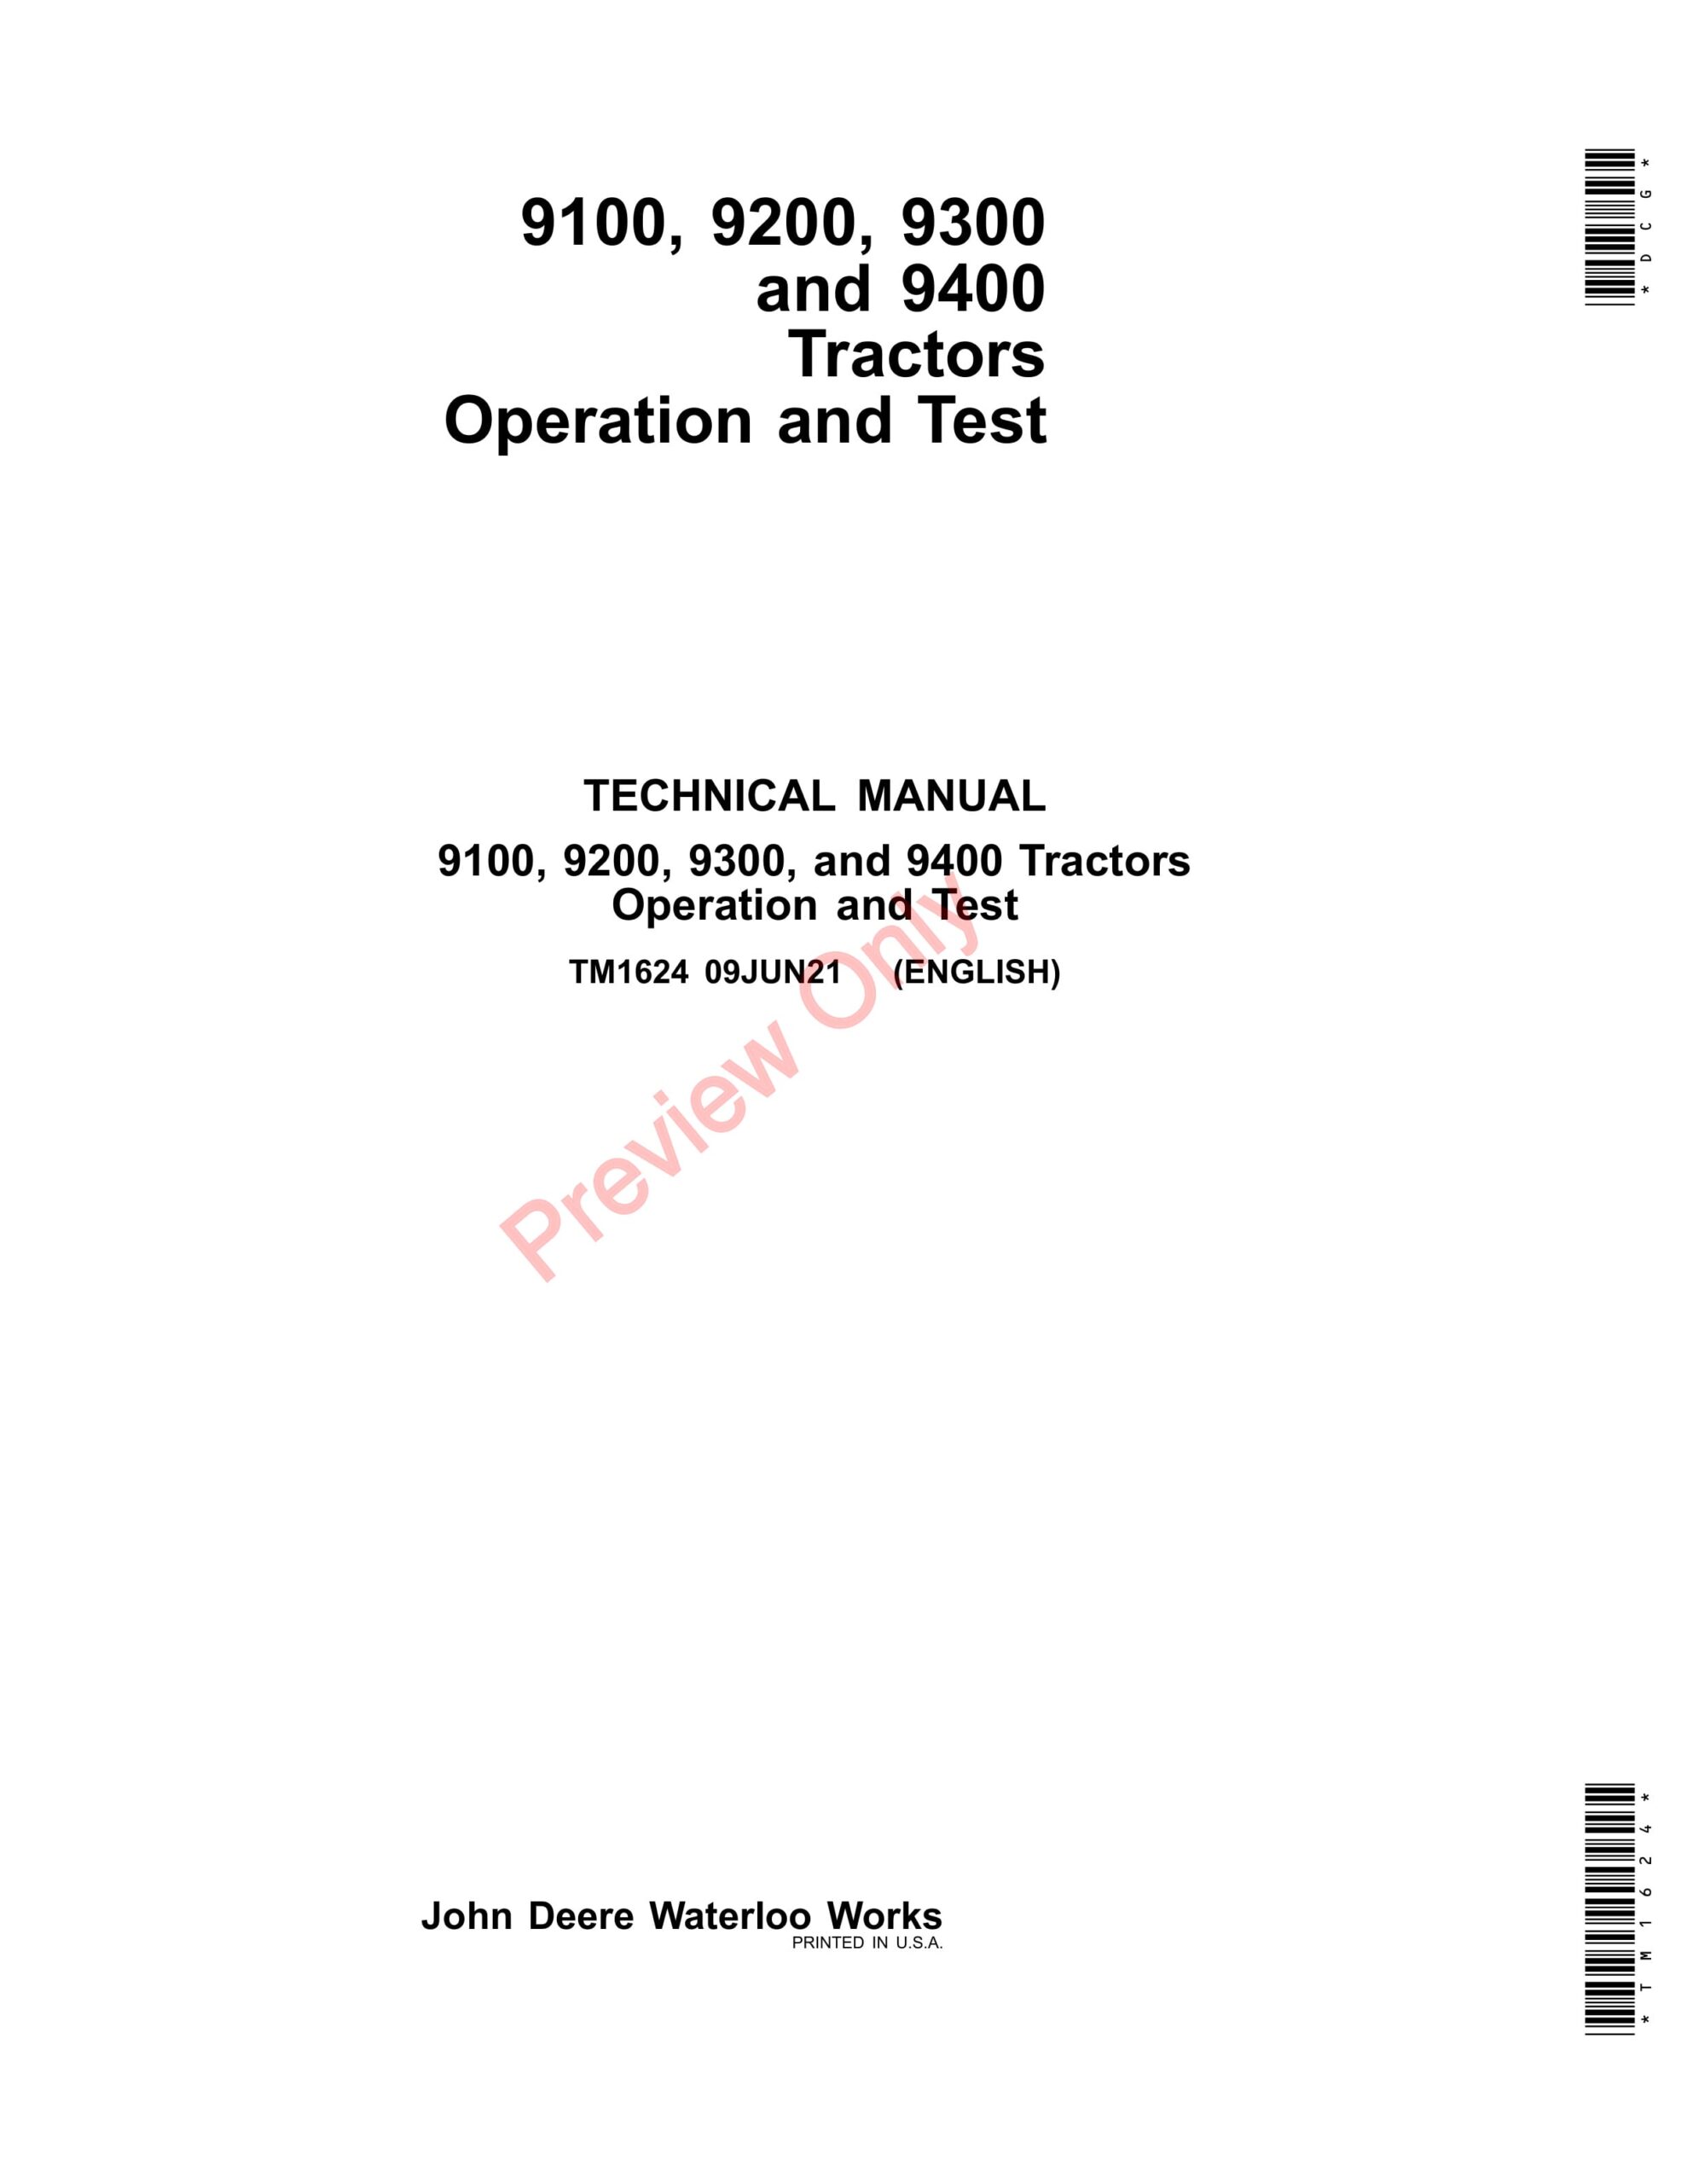 John Deere 9100, 9200, 9300 and 9400 Tractors Technical Manual TM1624 09JUN21-1